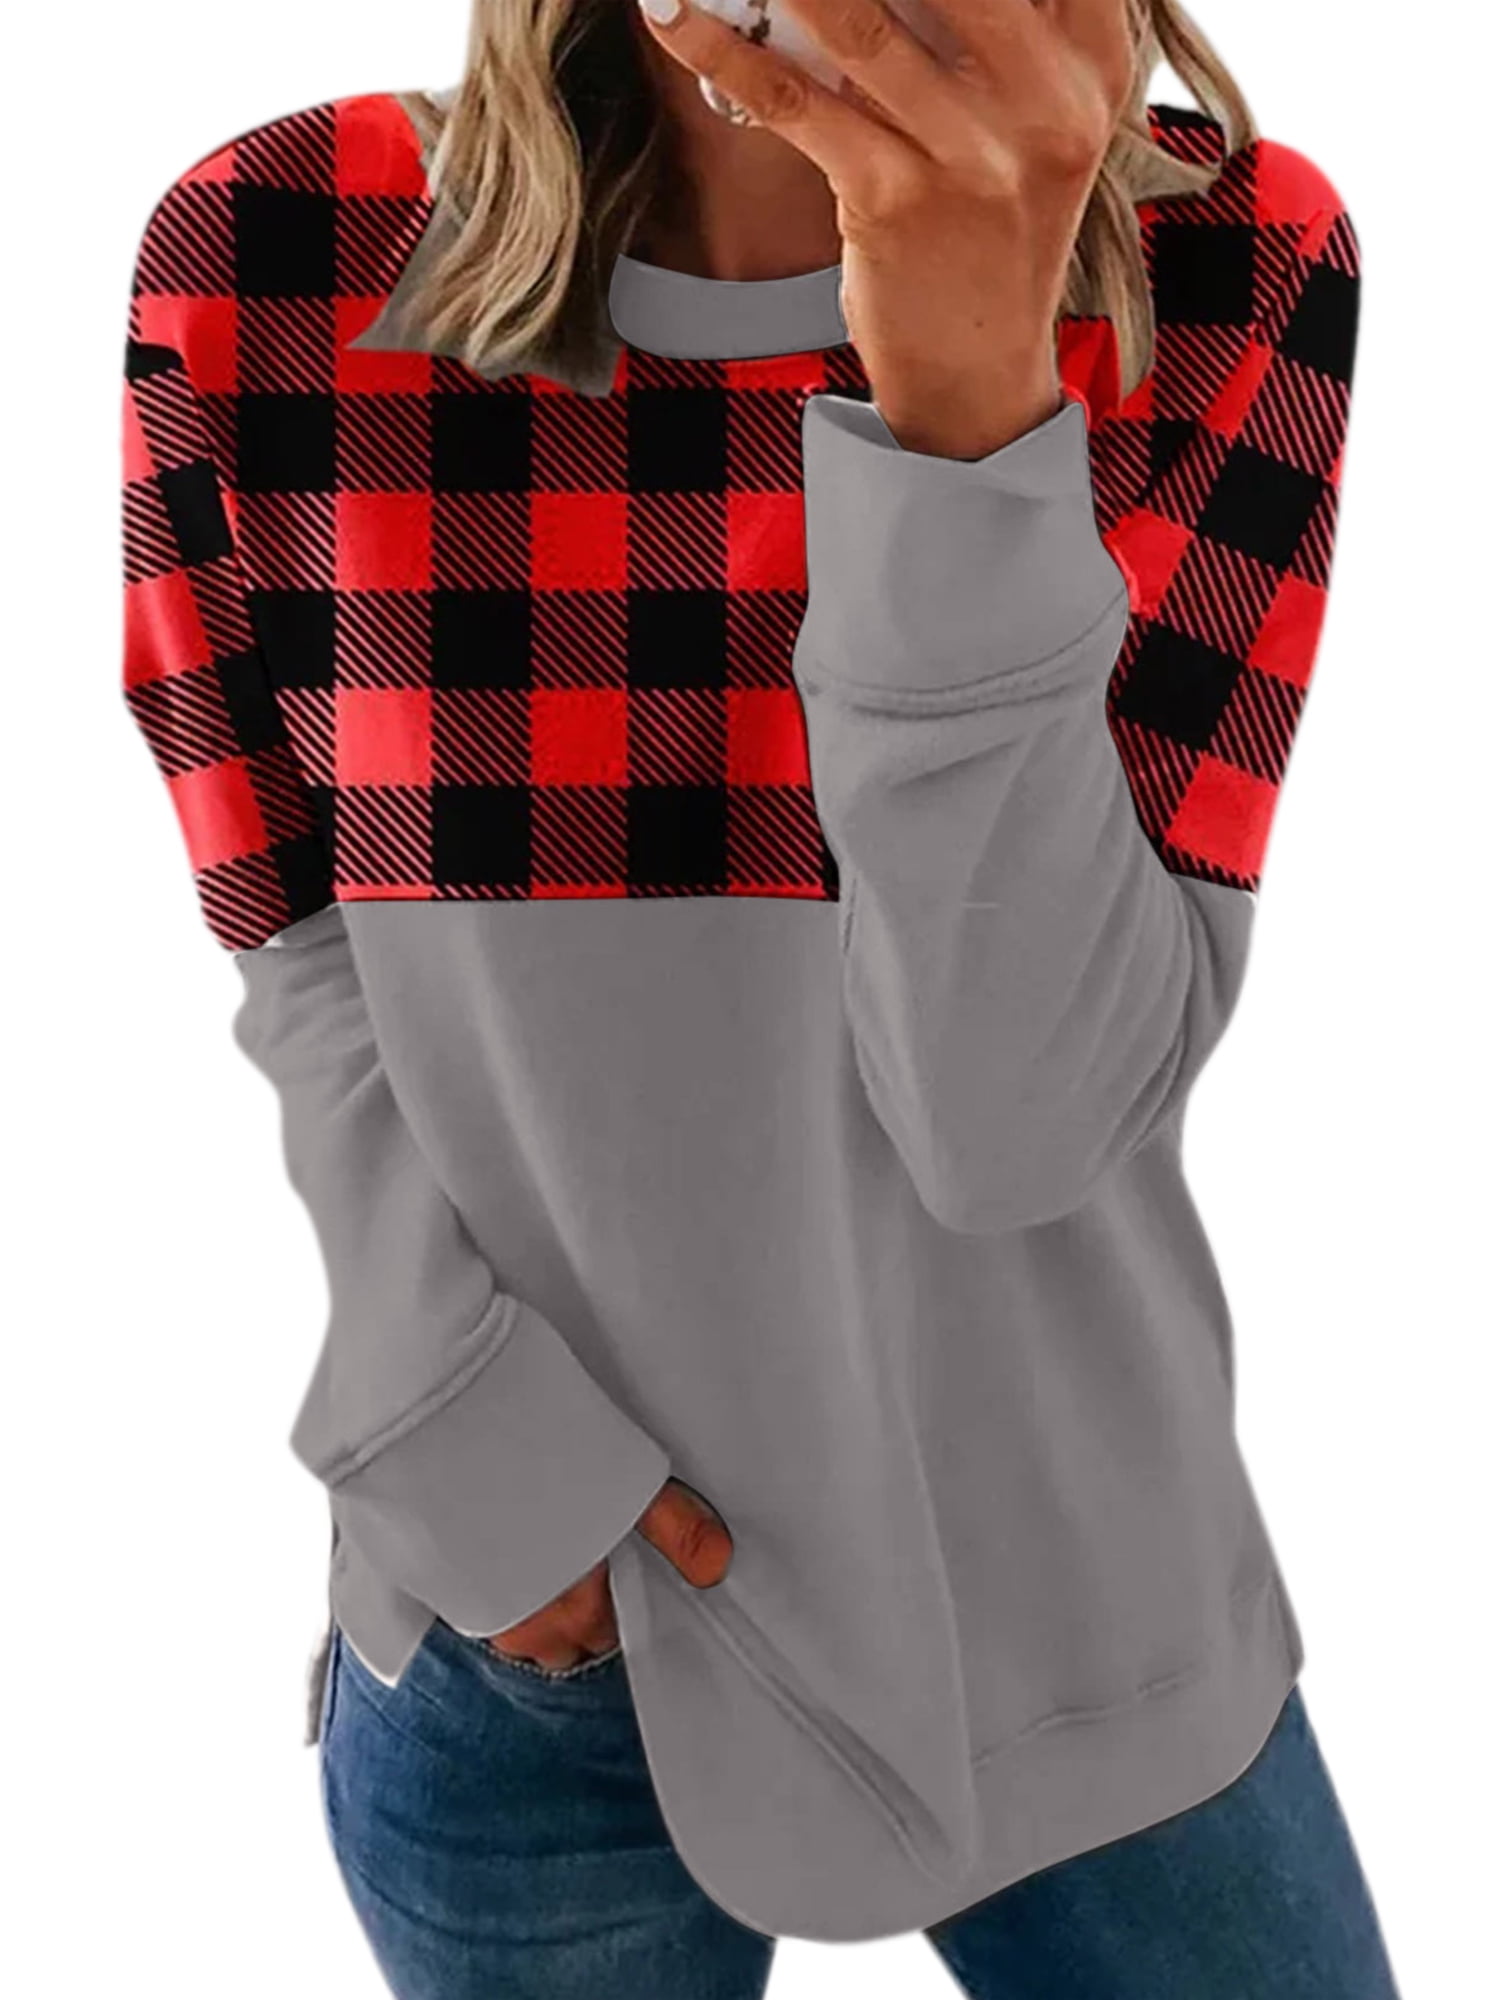 XUETON Women Buffalo Plaid Sweatshirts Casual Lightweight Soft Cozy Loose Fit Long Sleeve Pullover Tunic Tops 